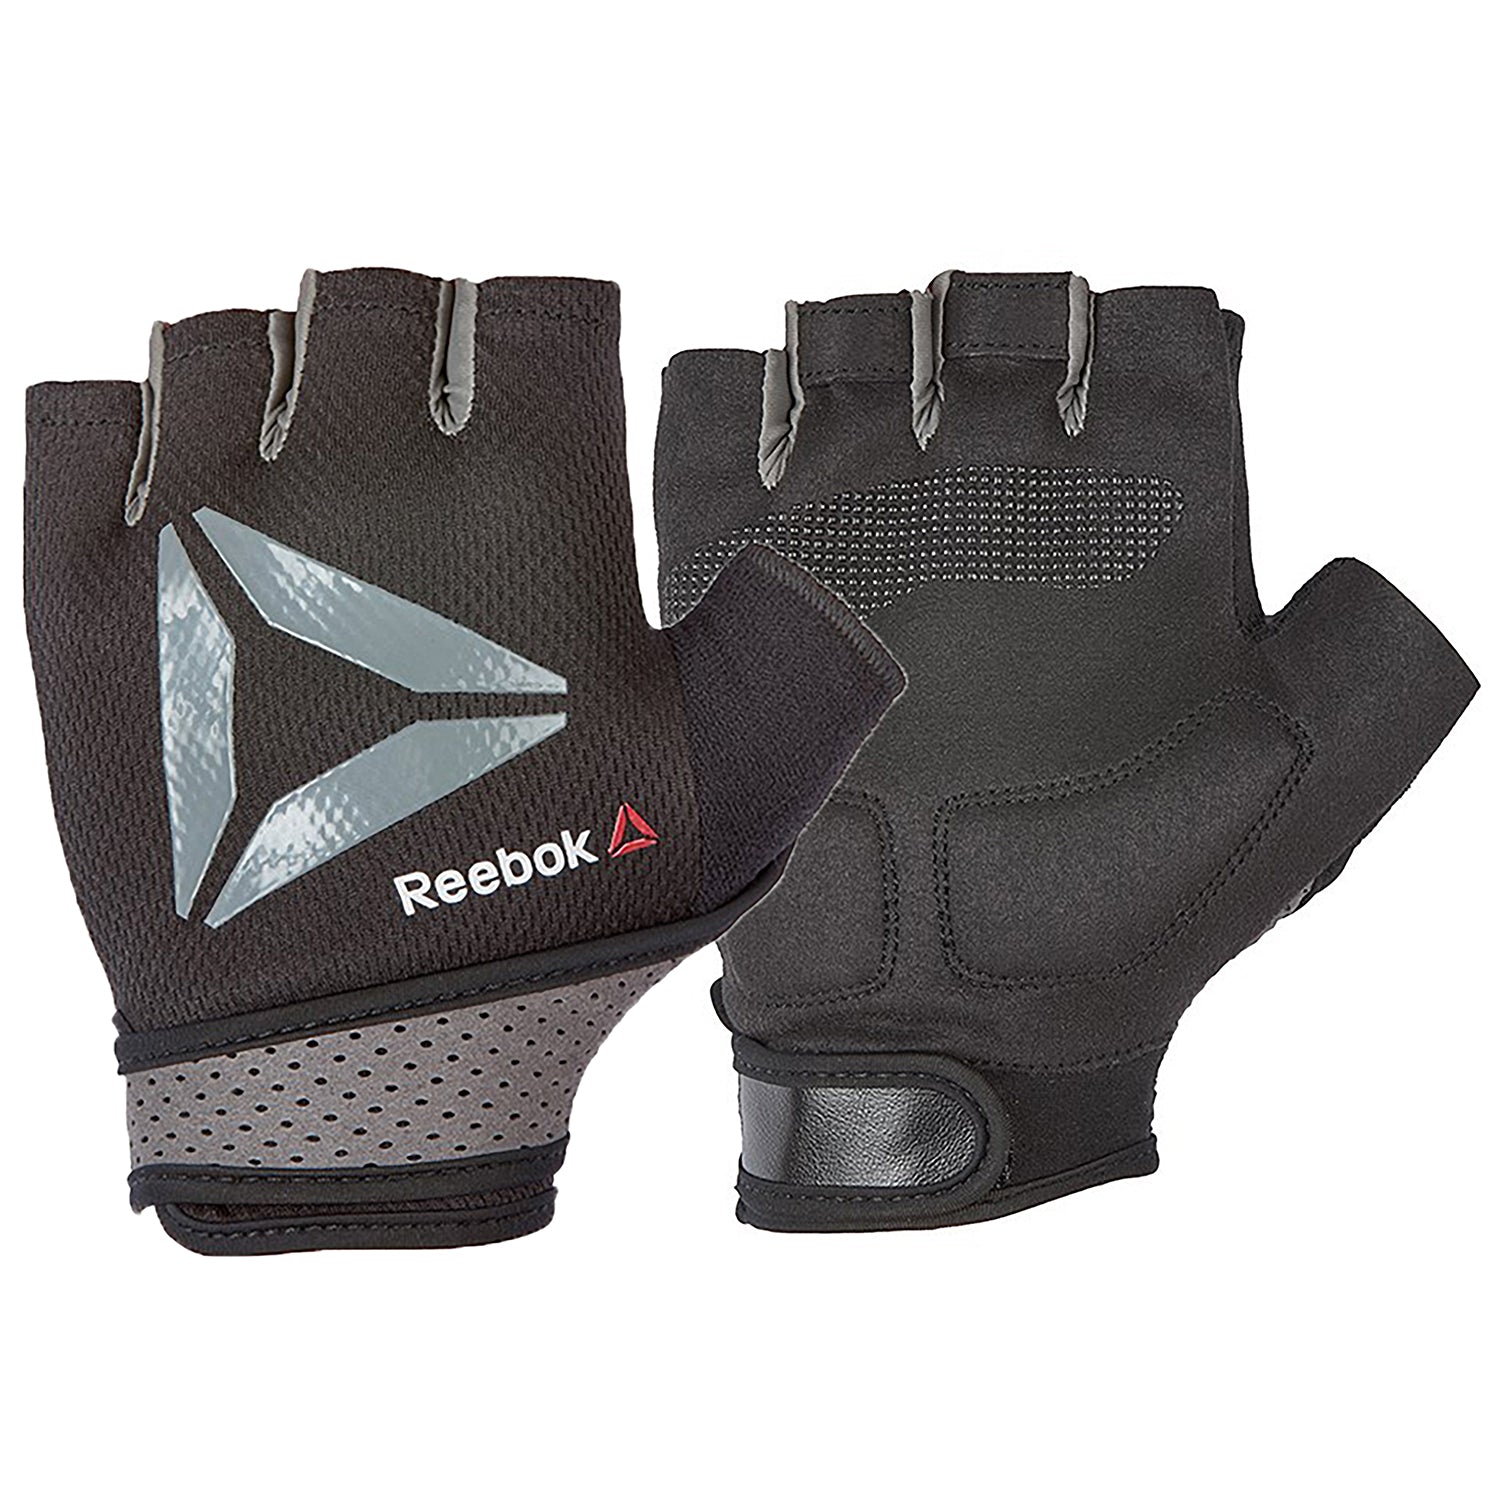 Reebok Training Gloves Large in Black